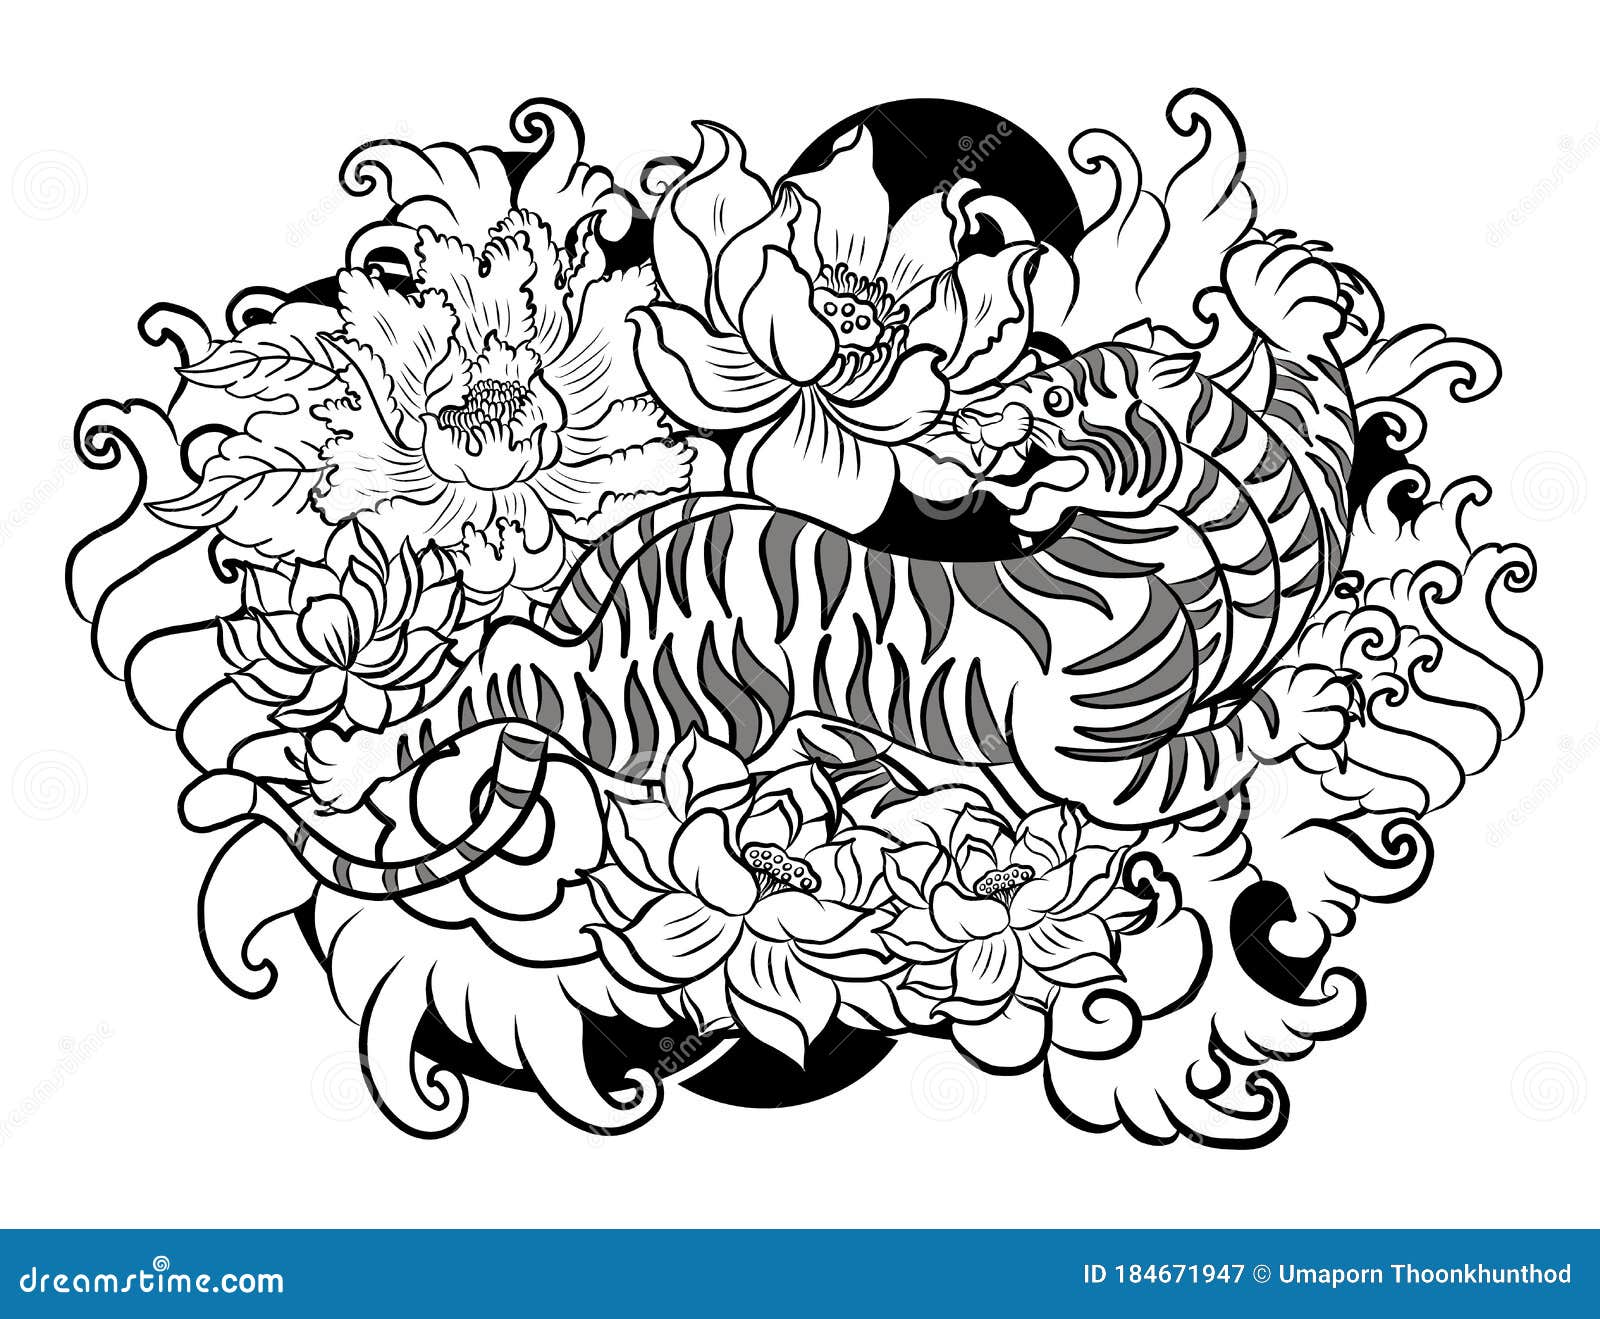 Traditional Japanese Tiger  Sticker Tattoo Design Stock Vector  - Illustration of color, design: 184671947